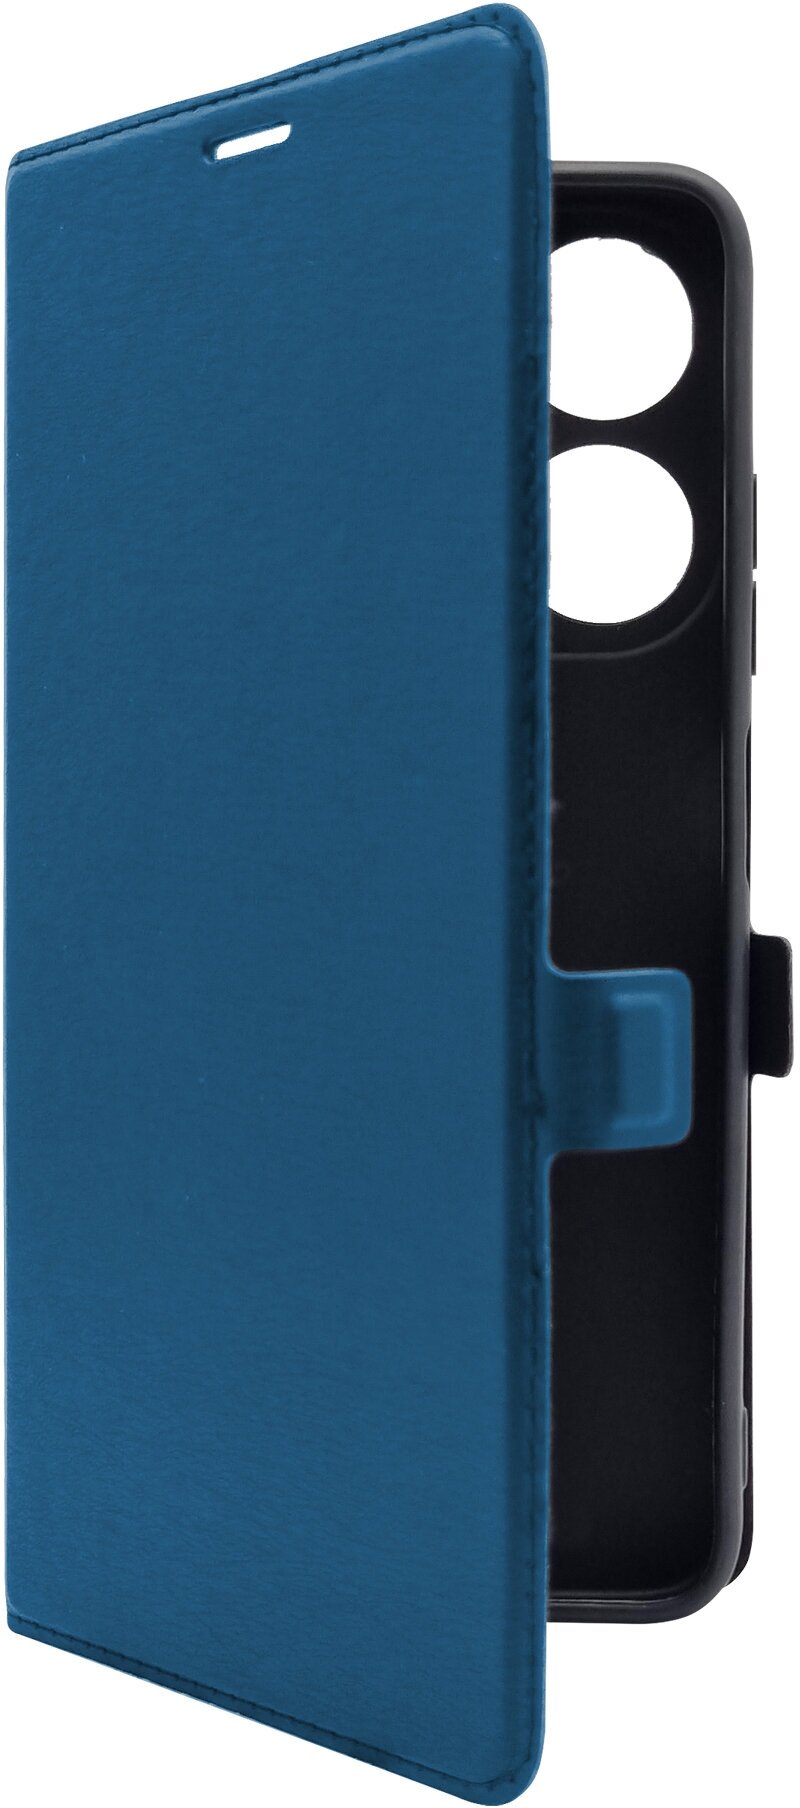 Чехол на Tecno Spark 10/ 10C (Техно Спарк 10/10С) синий книжка эко-кожа с функцией подставки отделением для карт и магнитами Book case Brozo